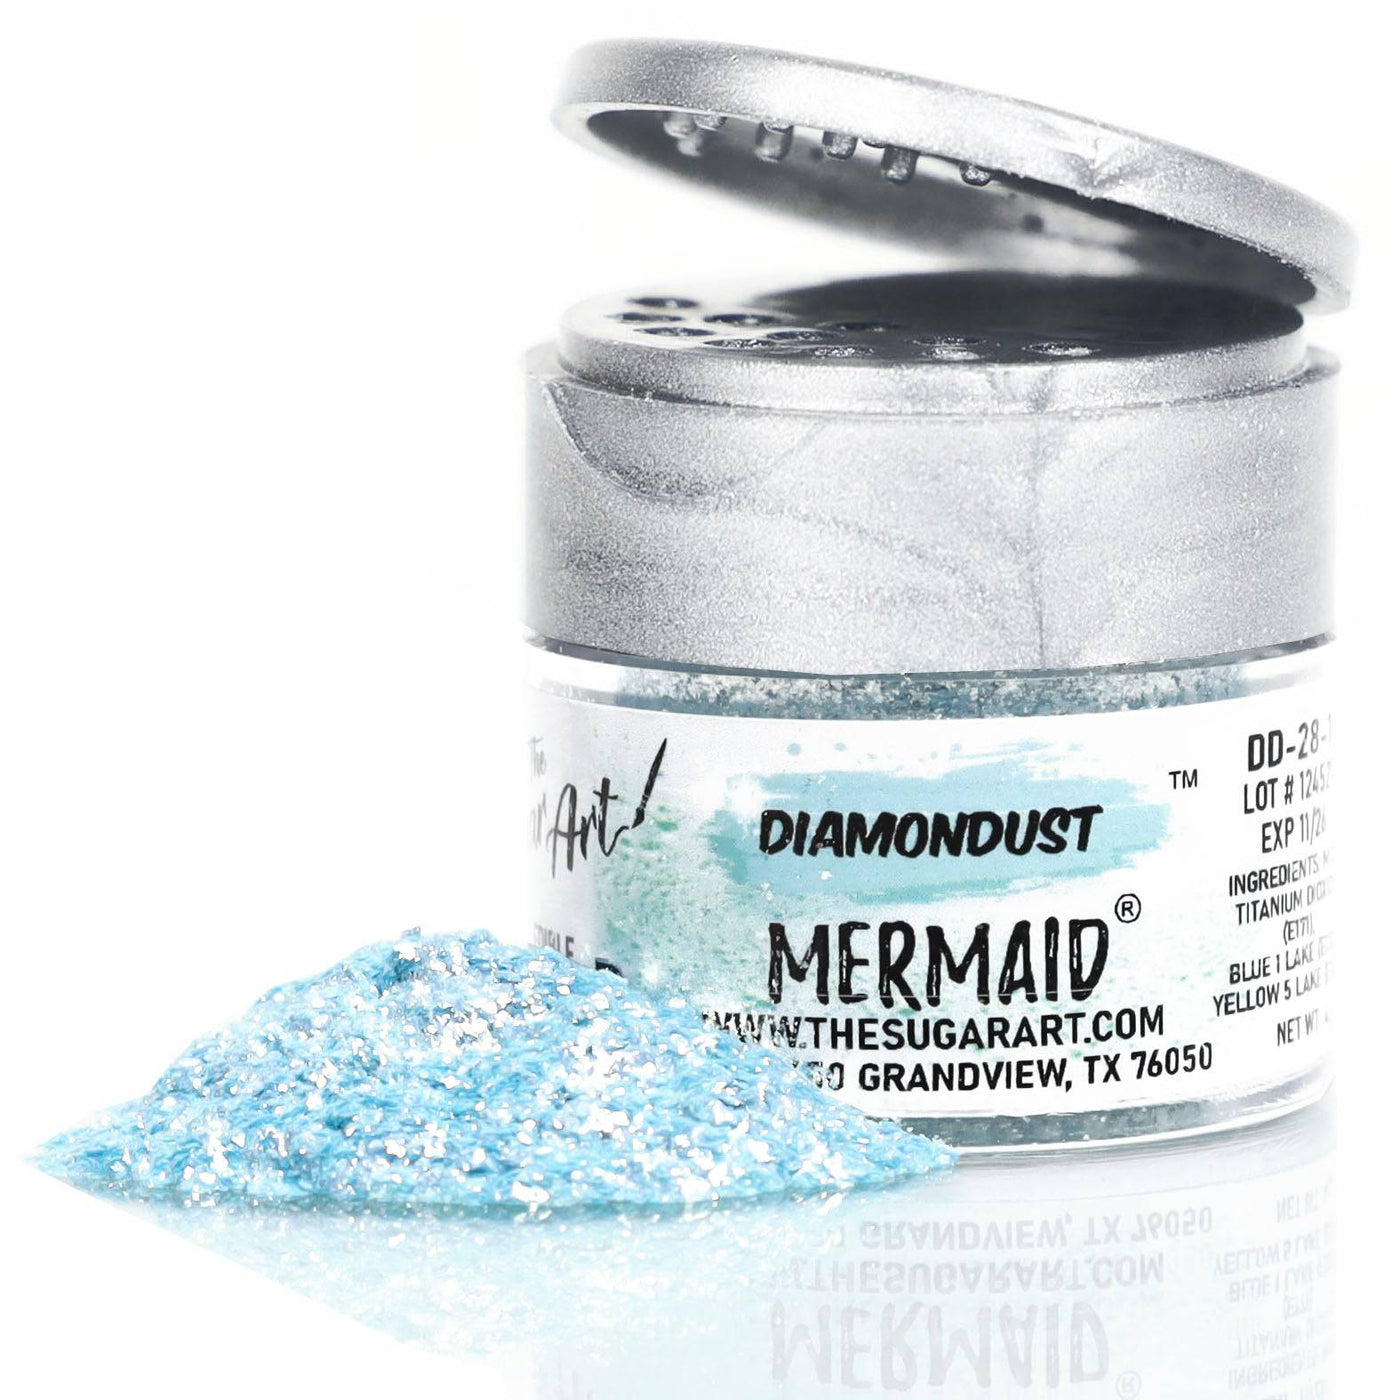 Mermaid Edible Glitter - The Sugar Art, Inc.